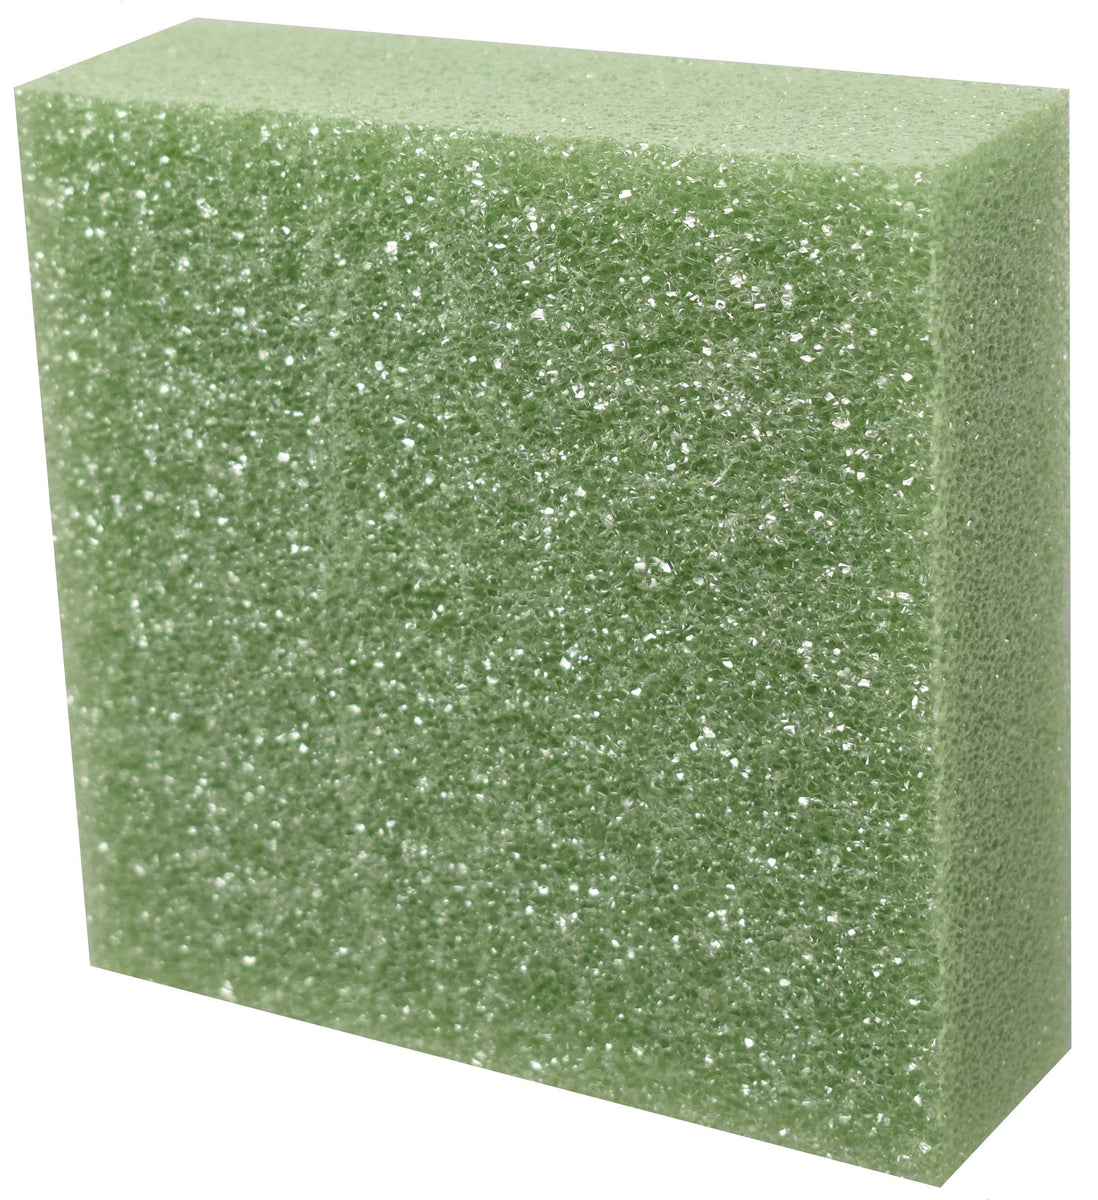 hebei huiya green styrofoam block for